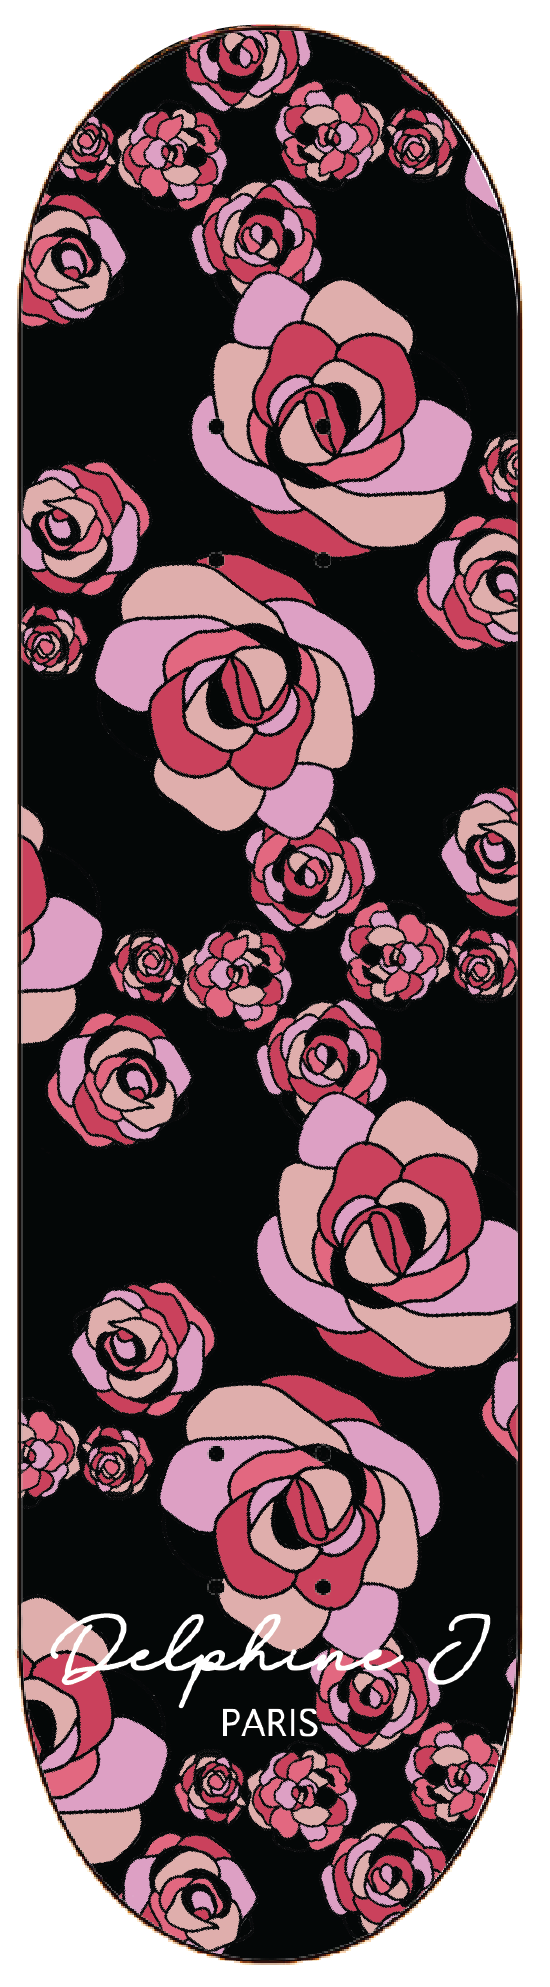 Delphine J Pink Flowers Deck